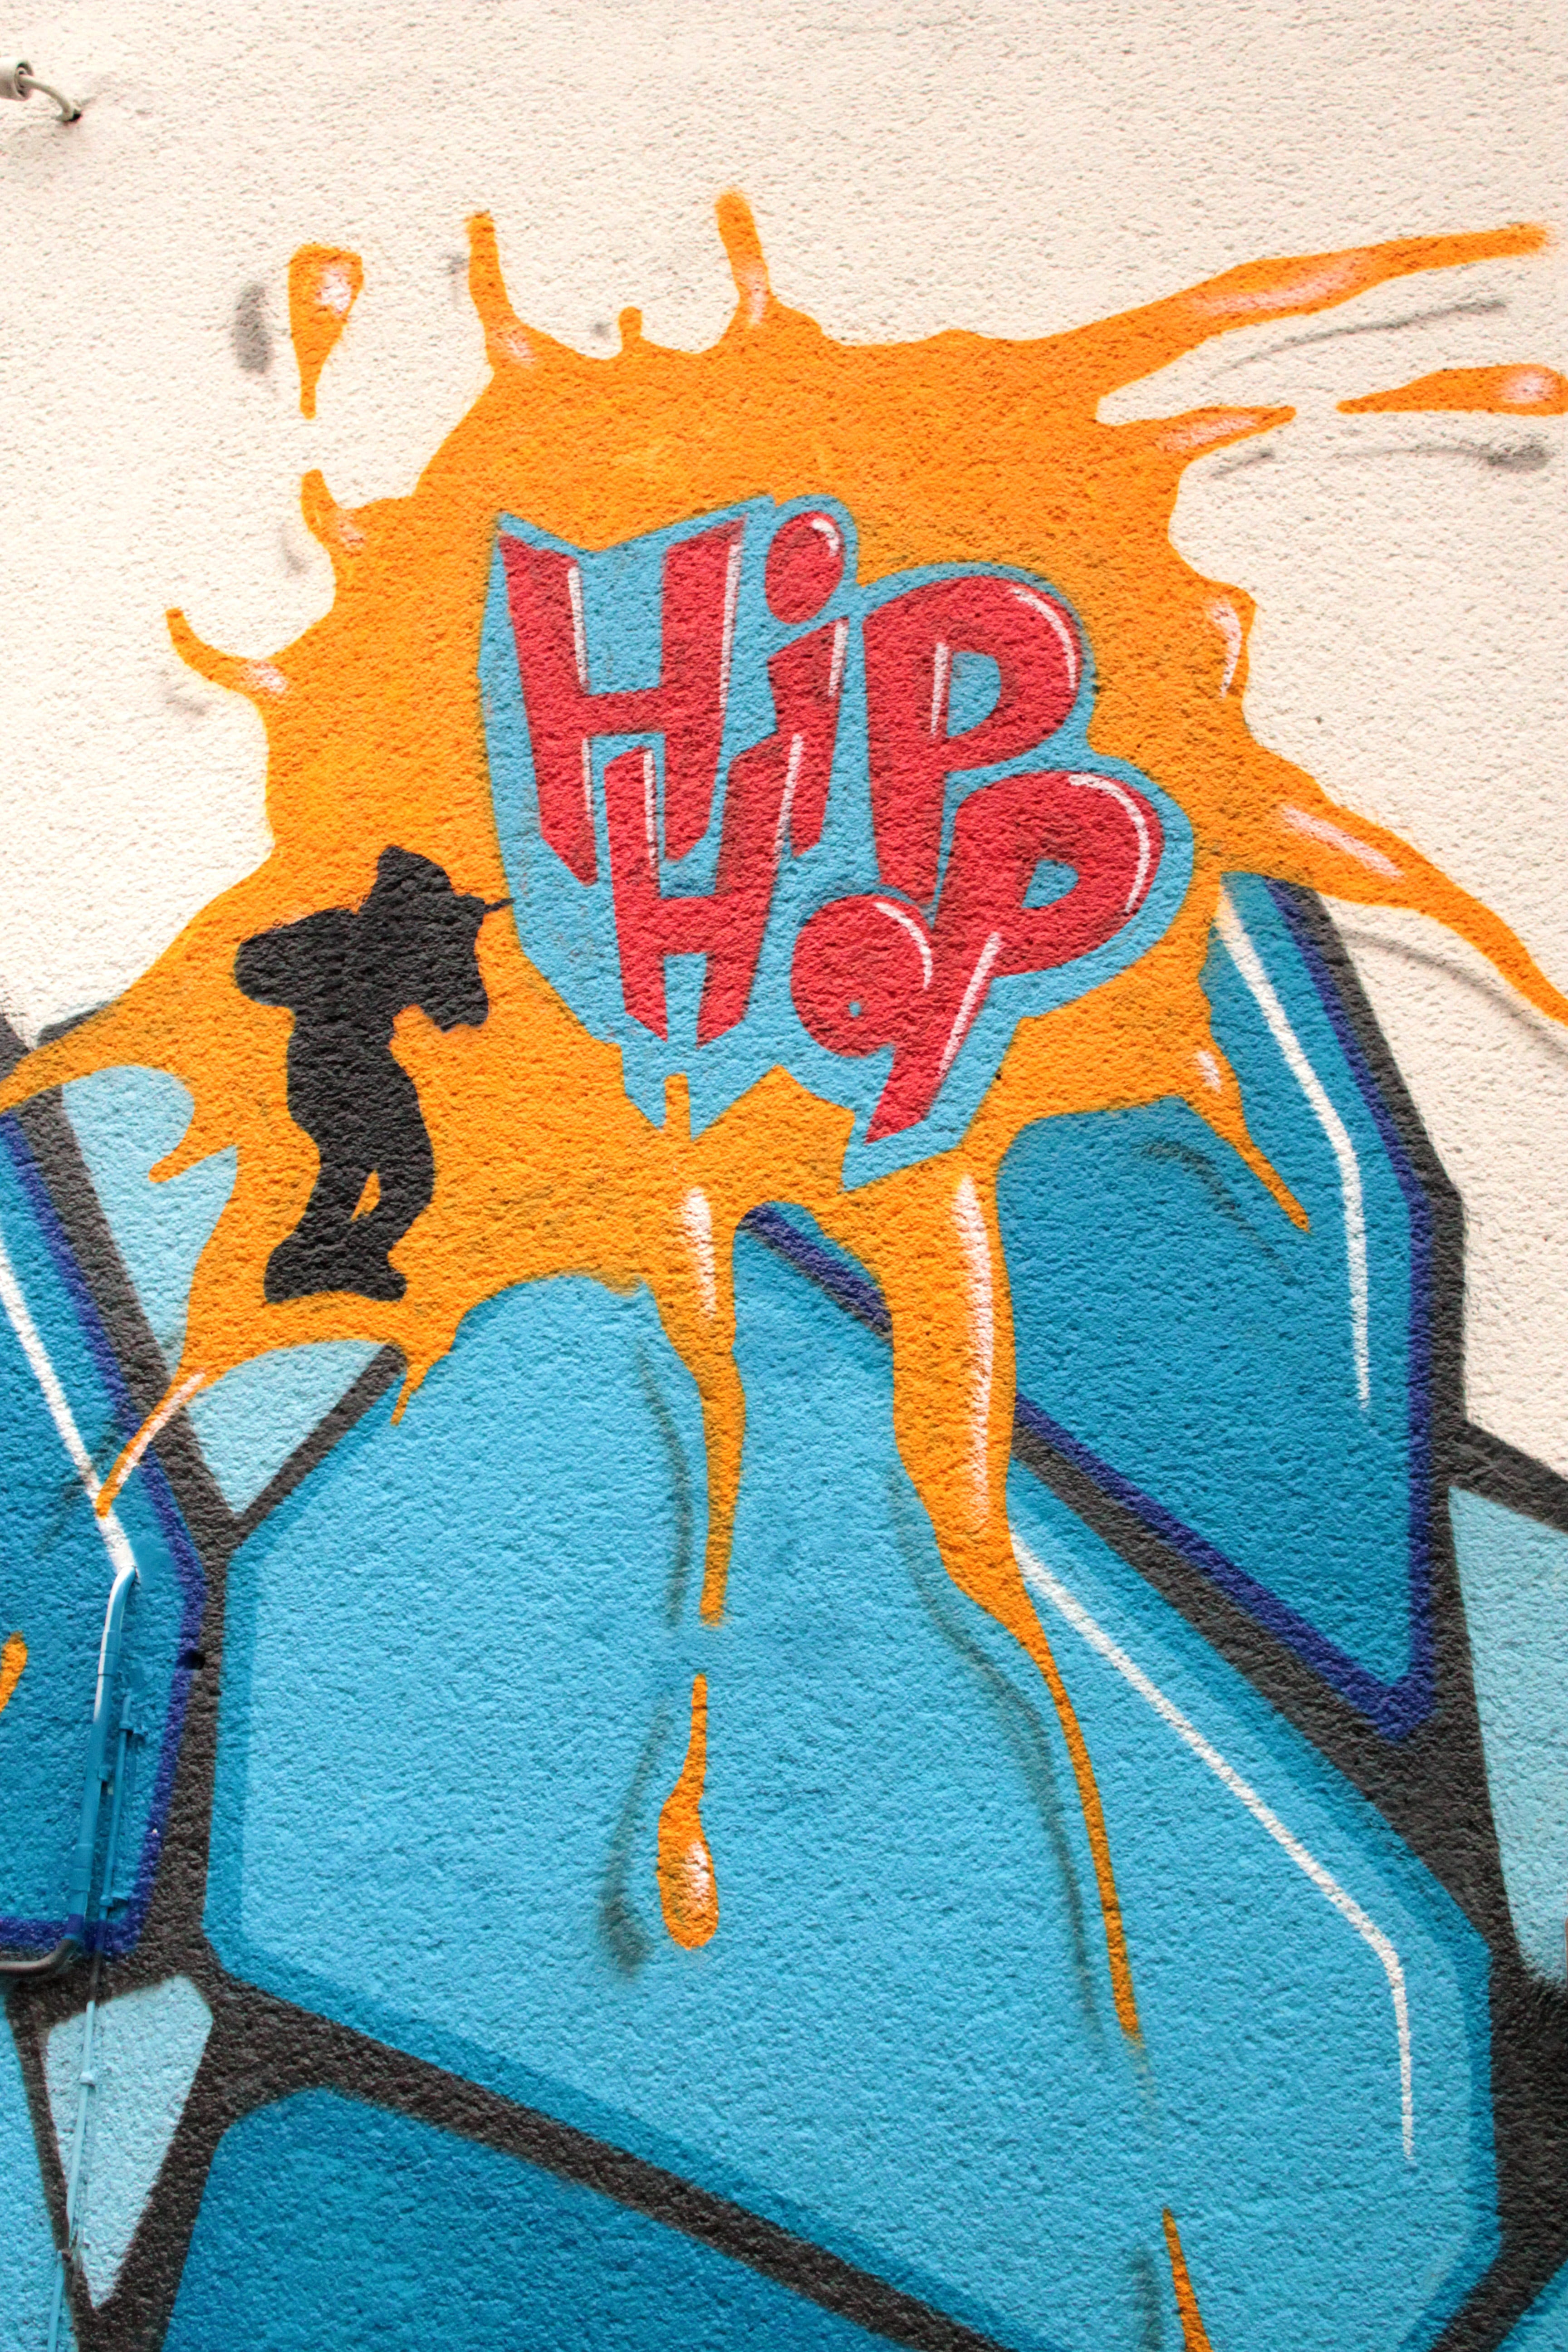 Hip Hop illustration, graffiti, hiphop, hauswand, wall, home